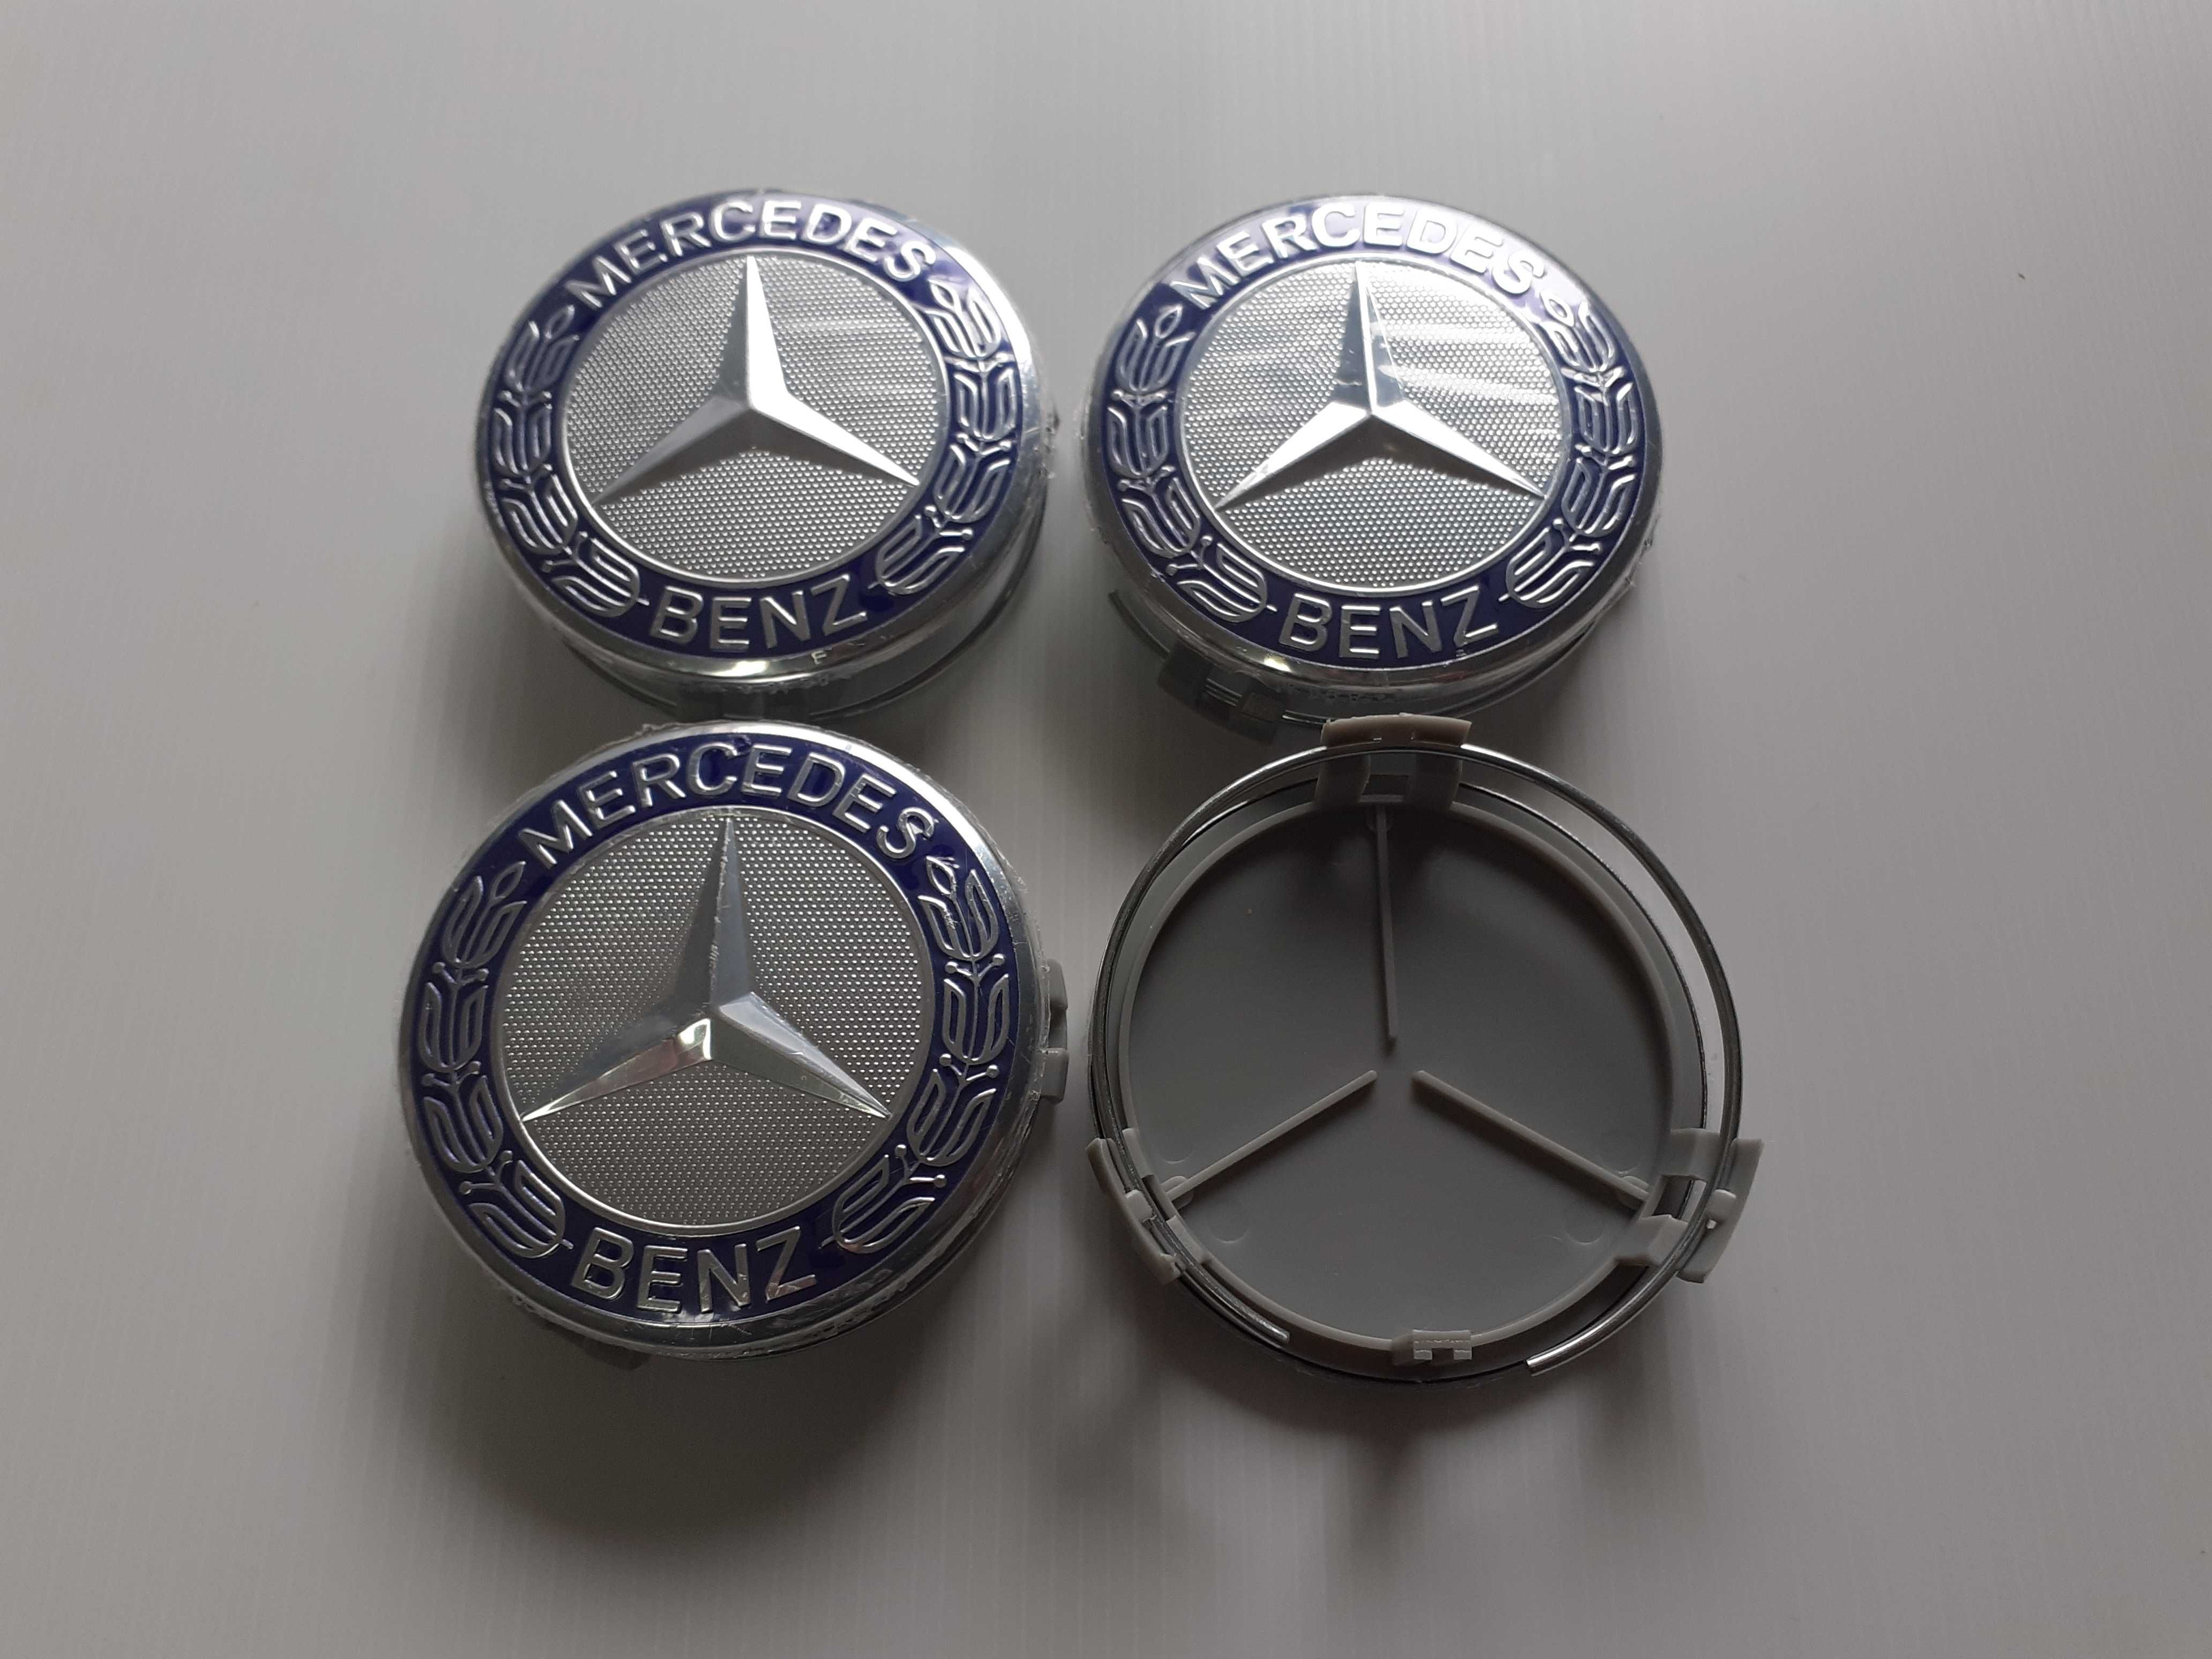 Centros/tampas de jante completos Mercedes-Benz